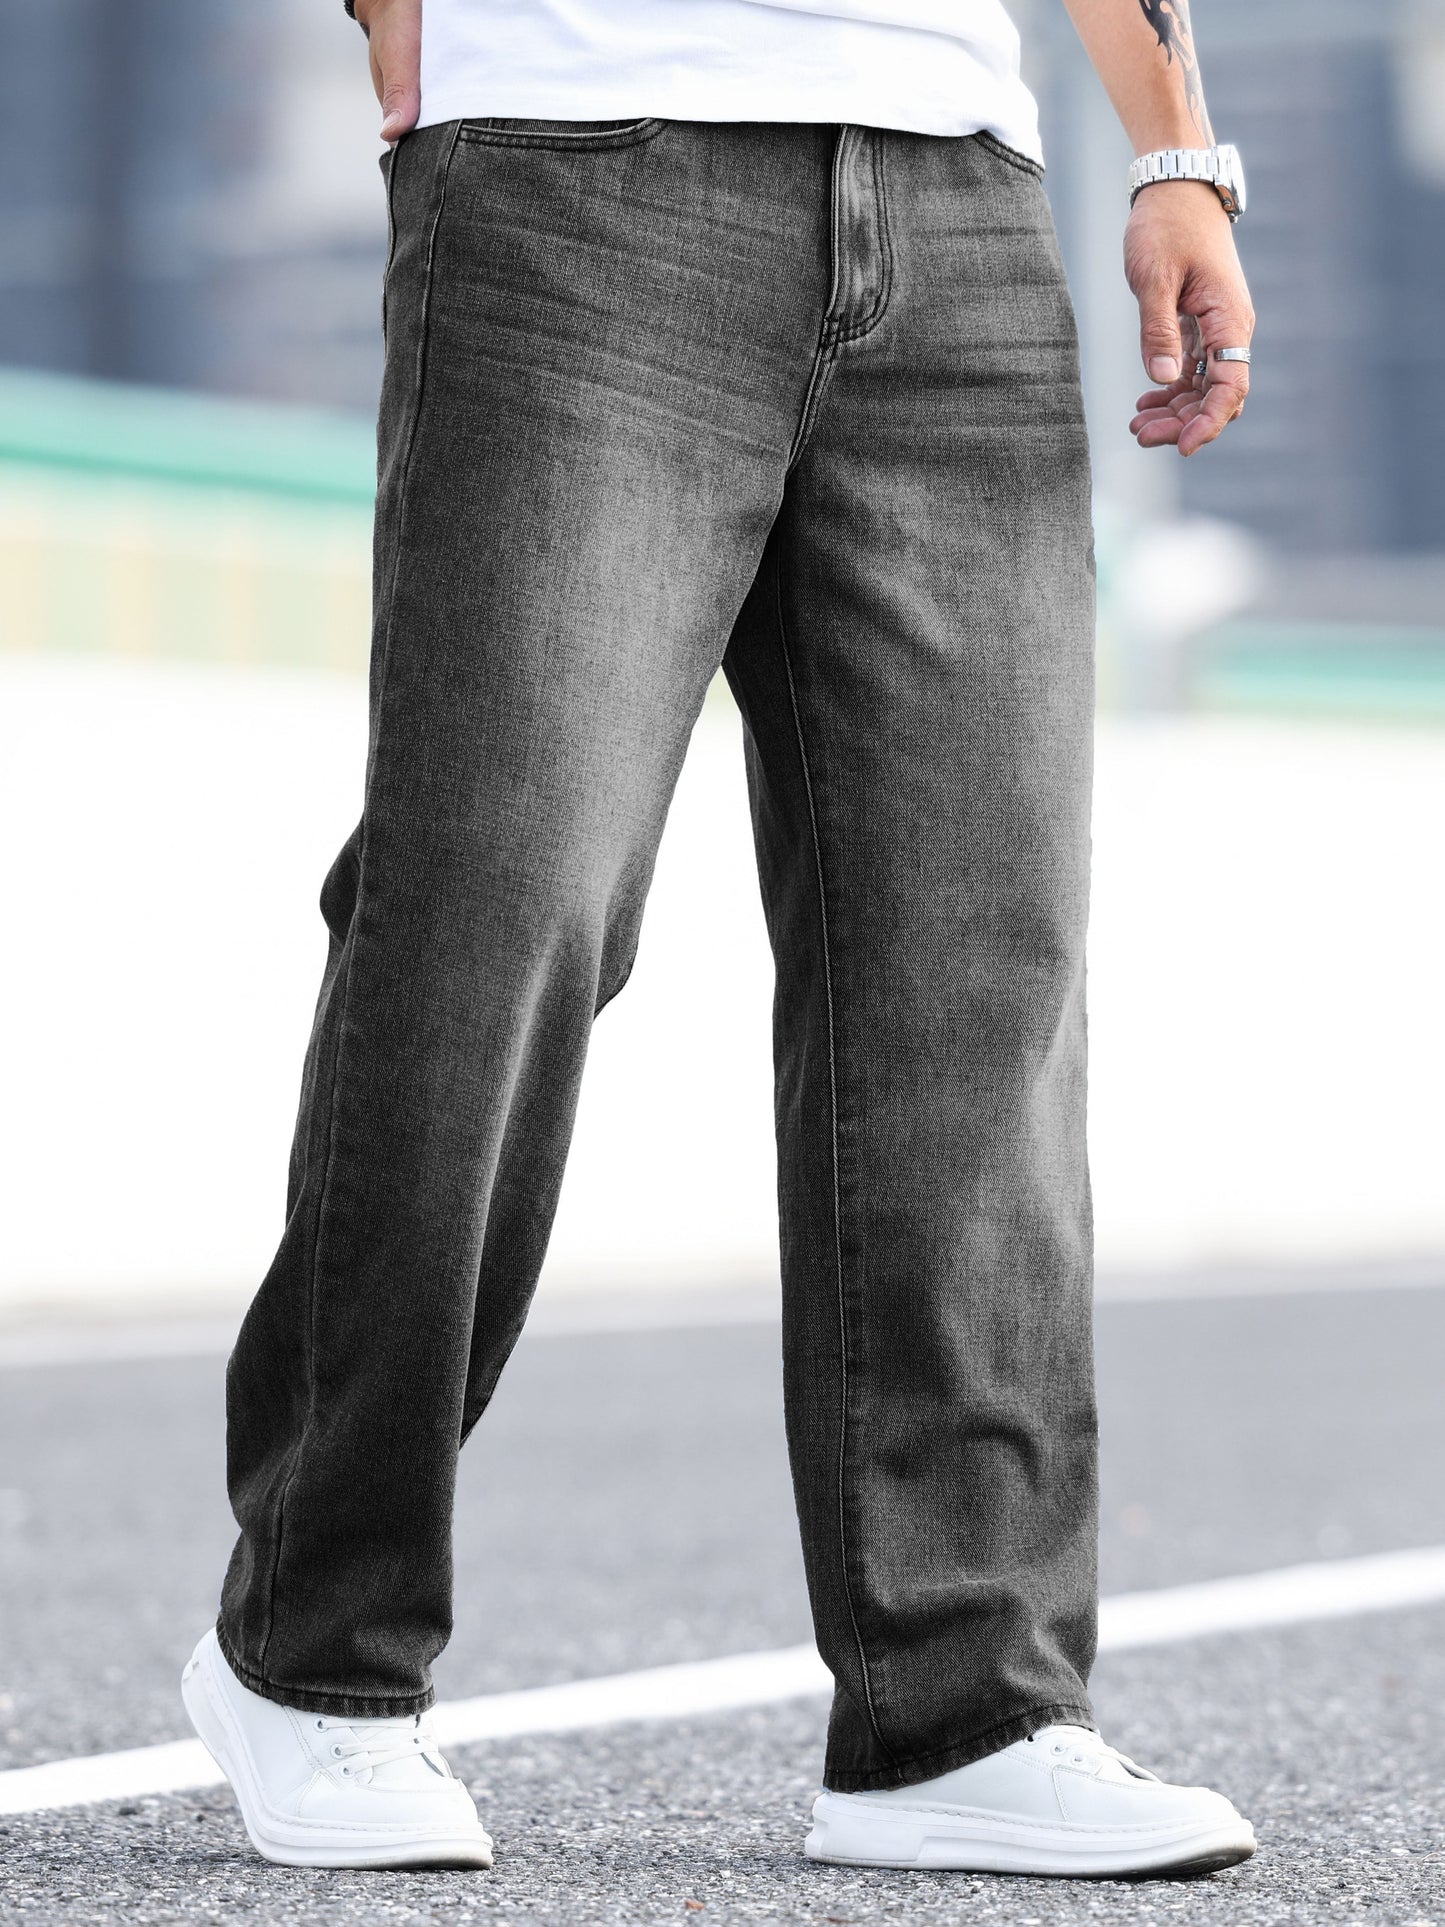 Classic Design Distressed Jeans, Men's Casual Drawstring Regular Fit Denim Pants For All Seasons